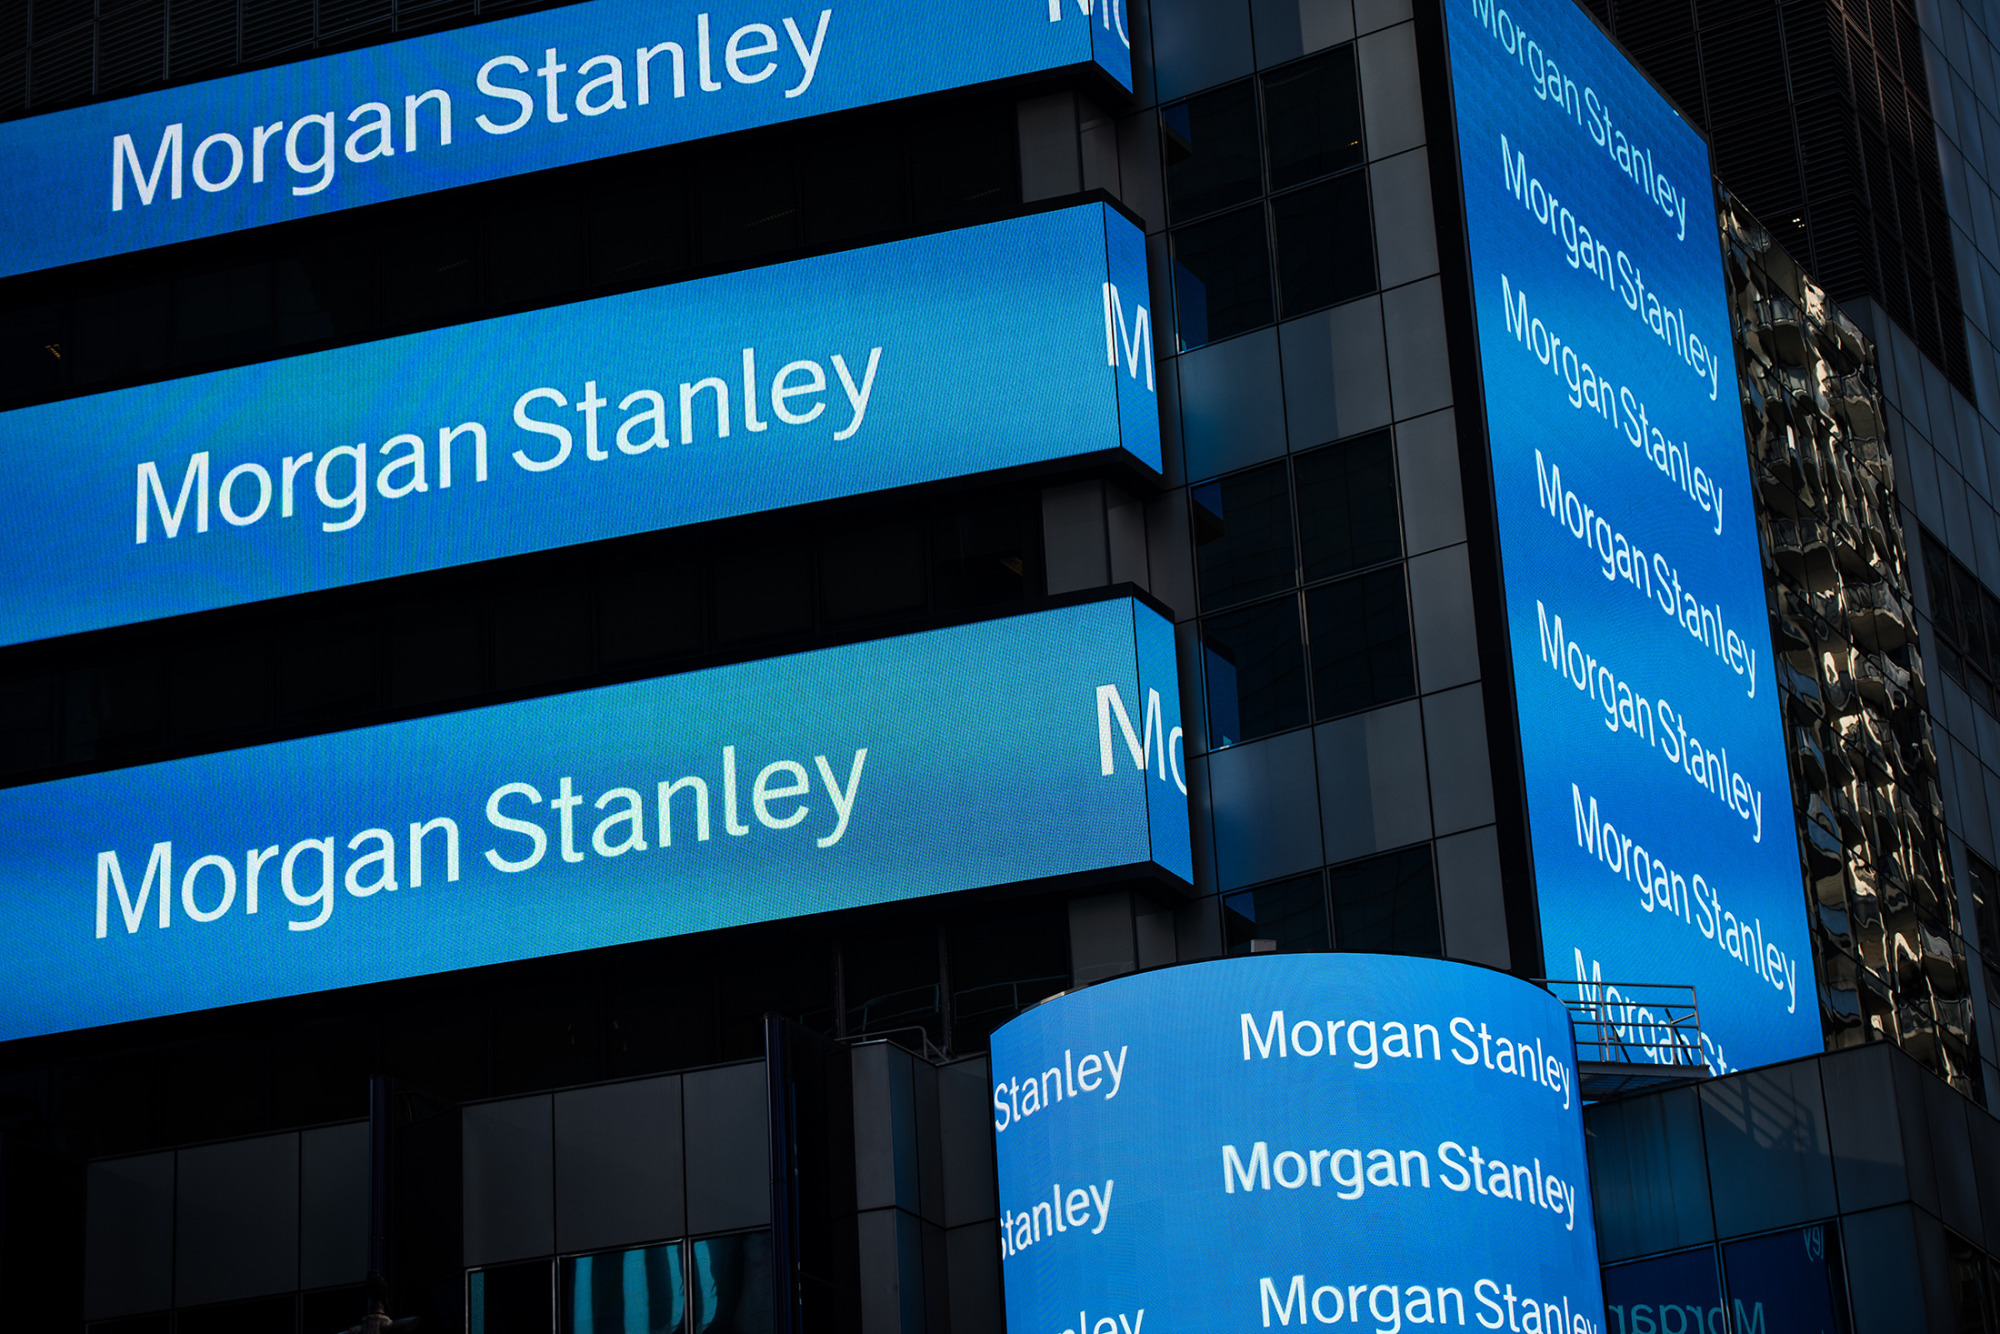 Morgan Stanley's headquarters in New York on Oct. 7, 2016.
